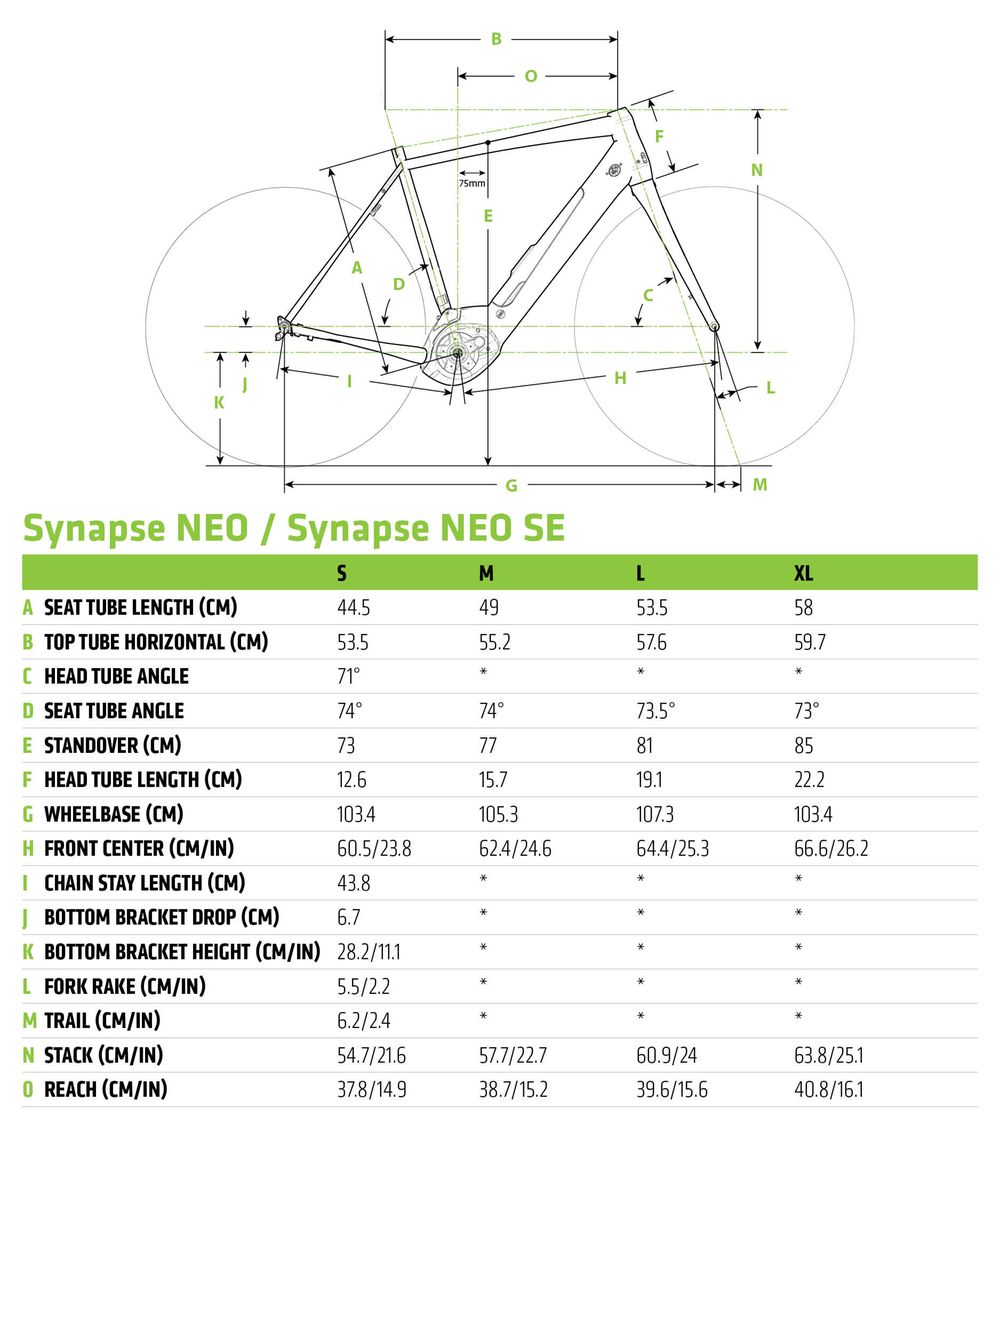 Synapse NEO SE - 